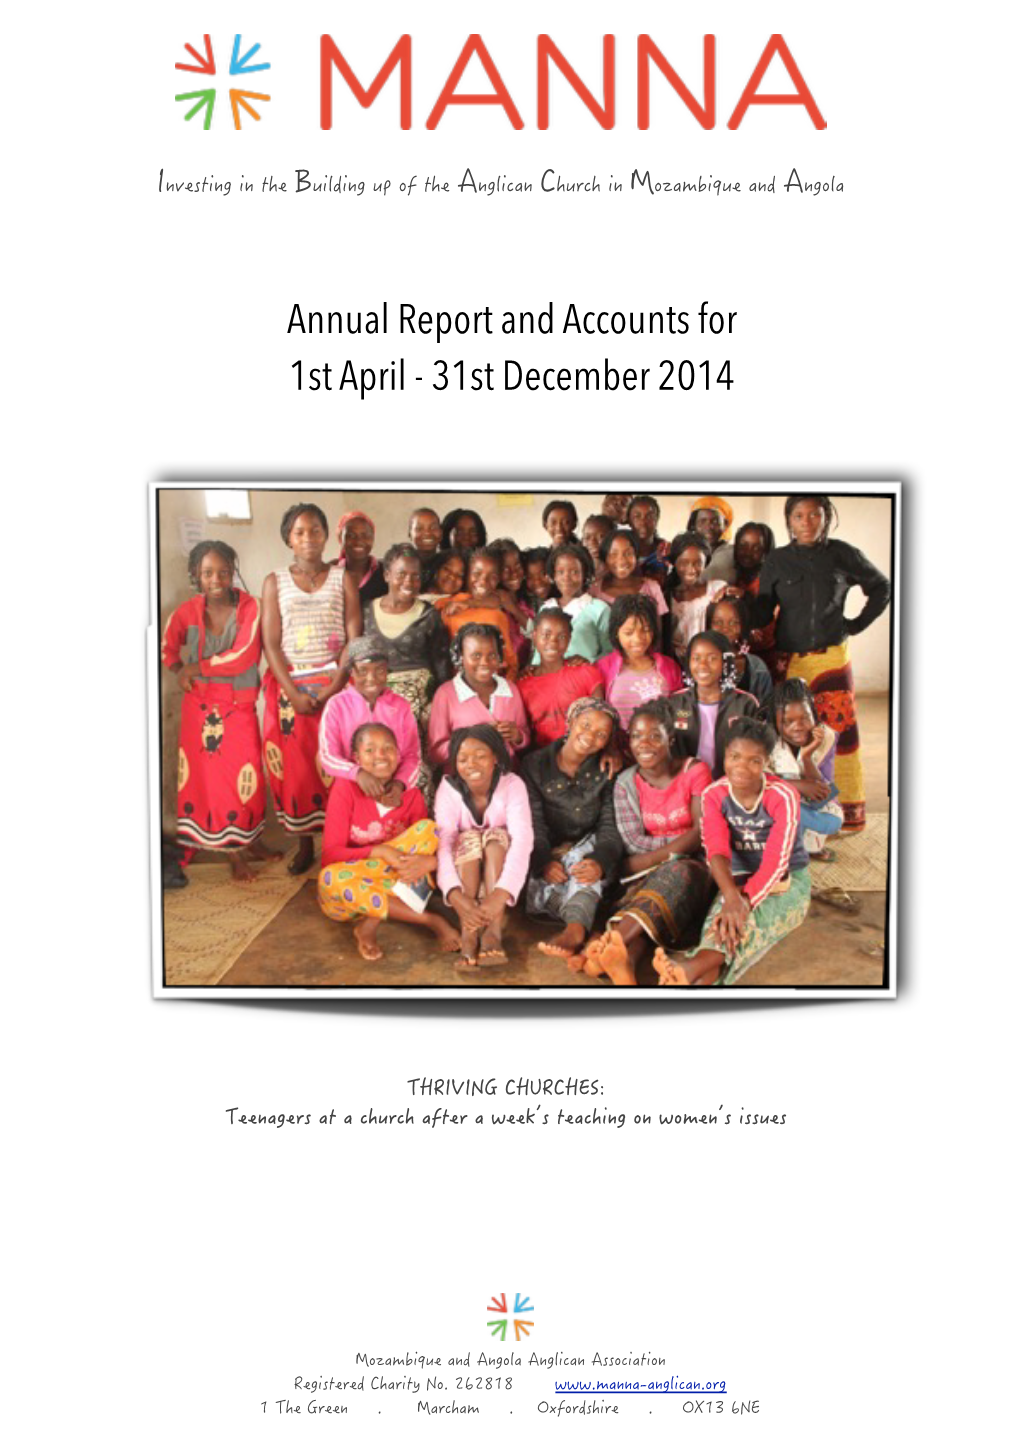 MANNA Annual Report & Accounts 2014